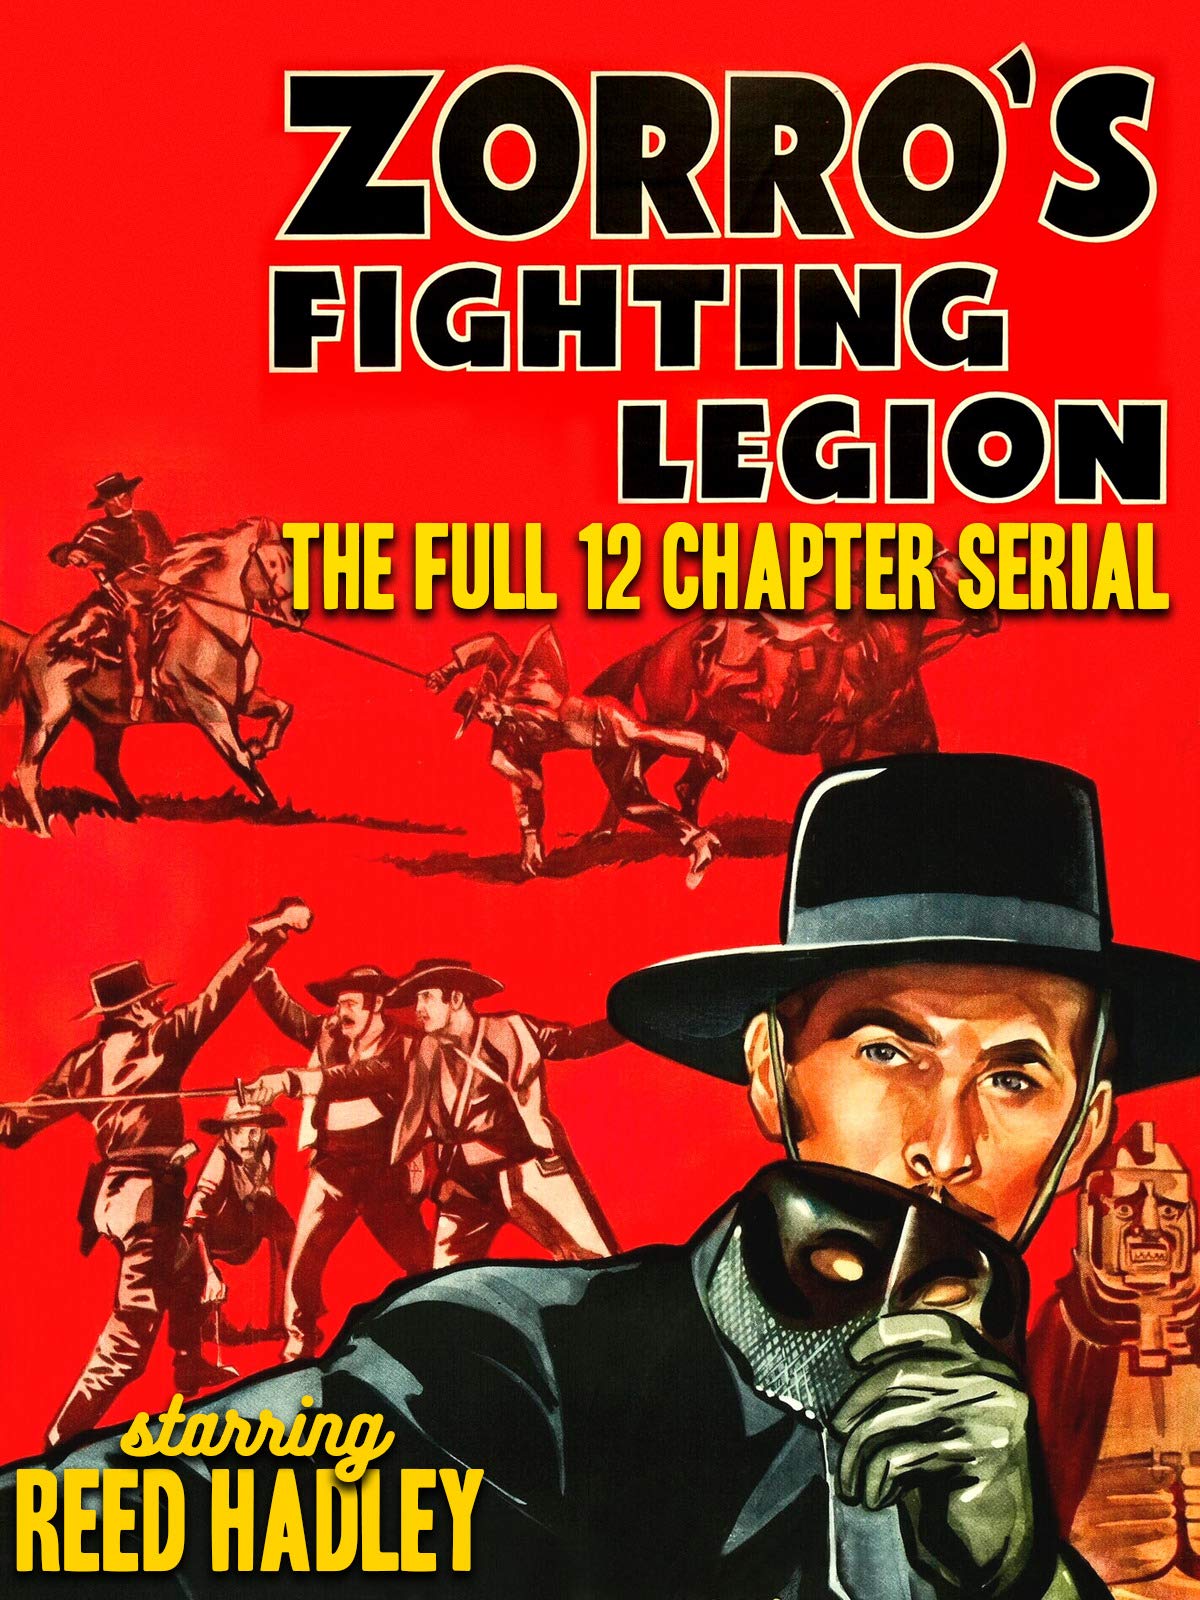 Zorro's Fighting Legion cliffhanger serial feature image